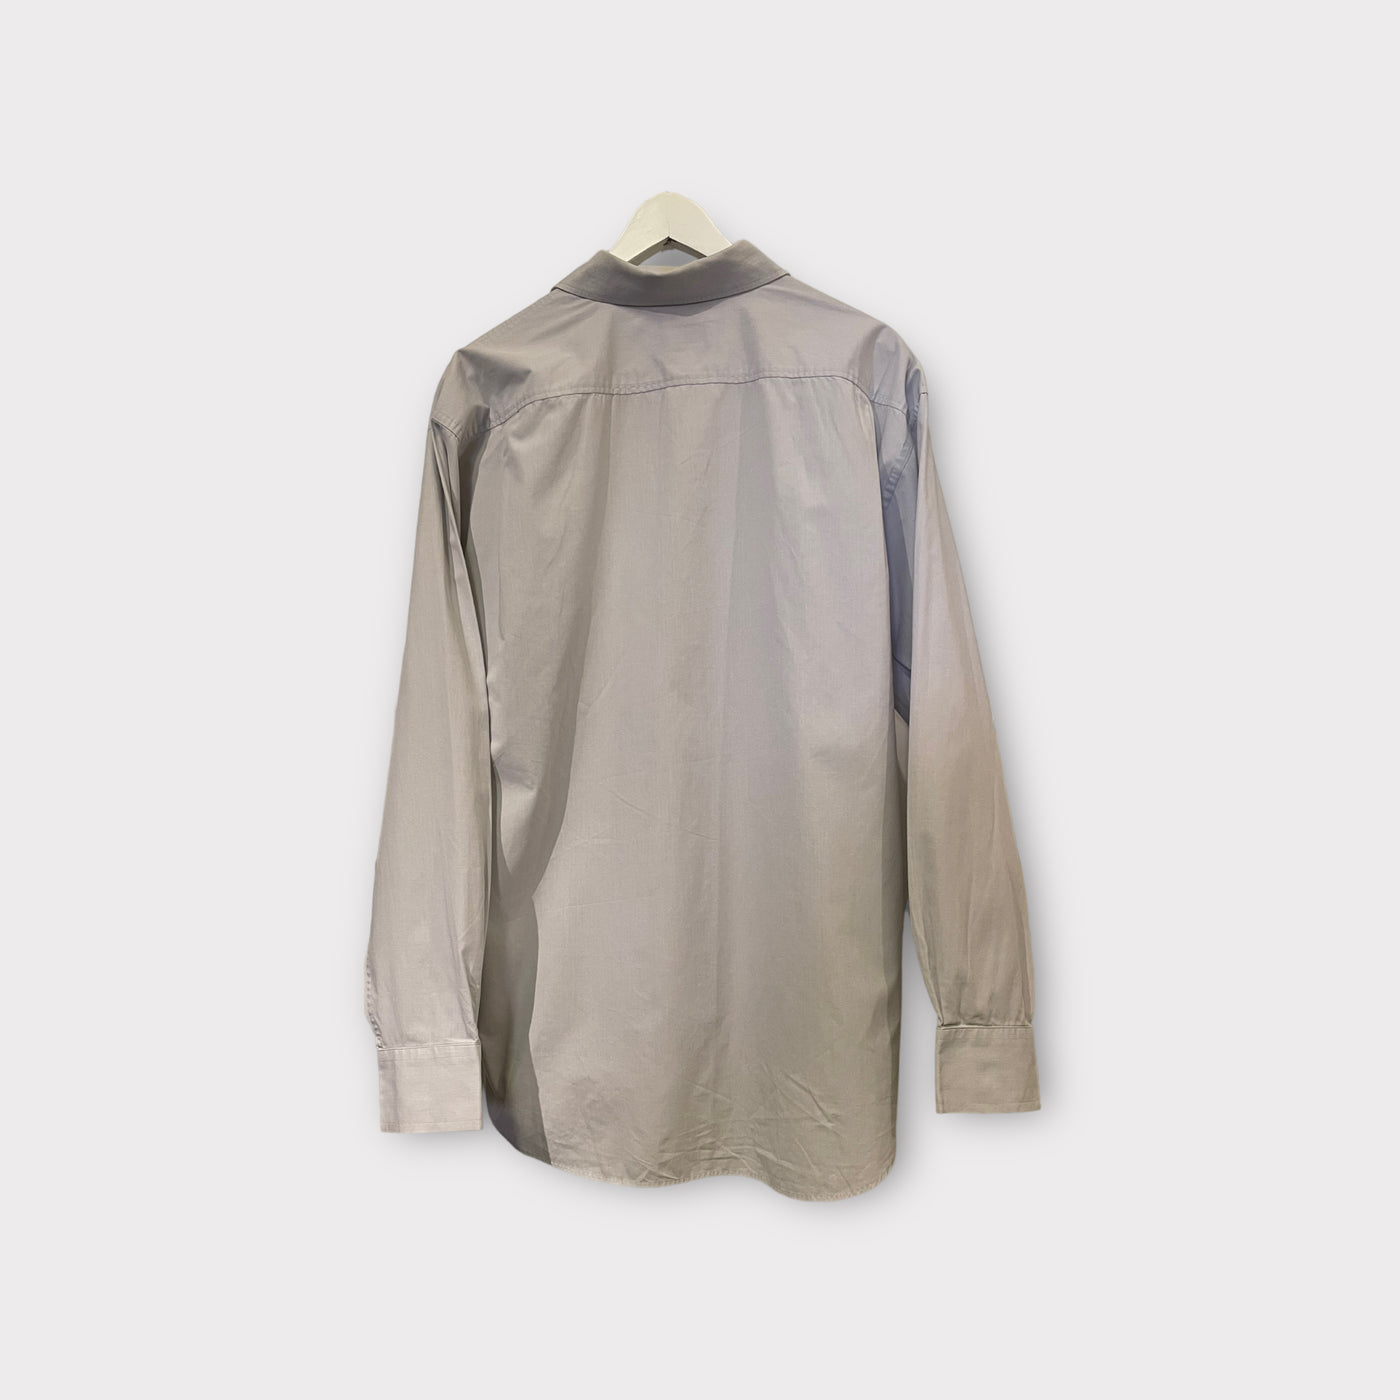 Yves Saint Laurent - long sleeve shirt